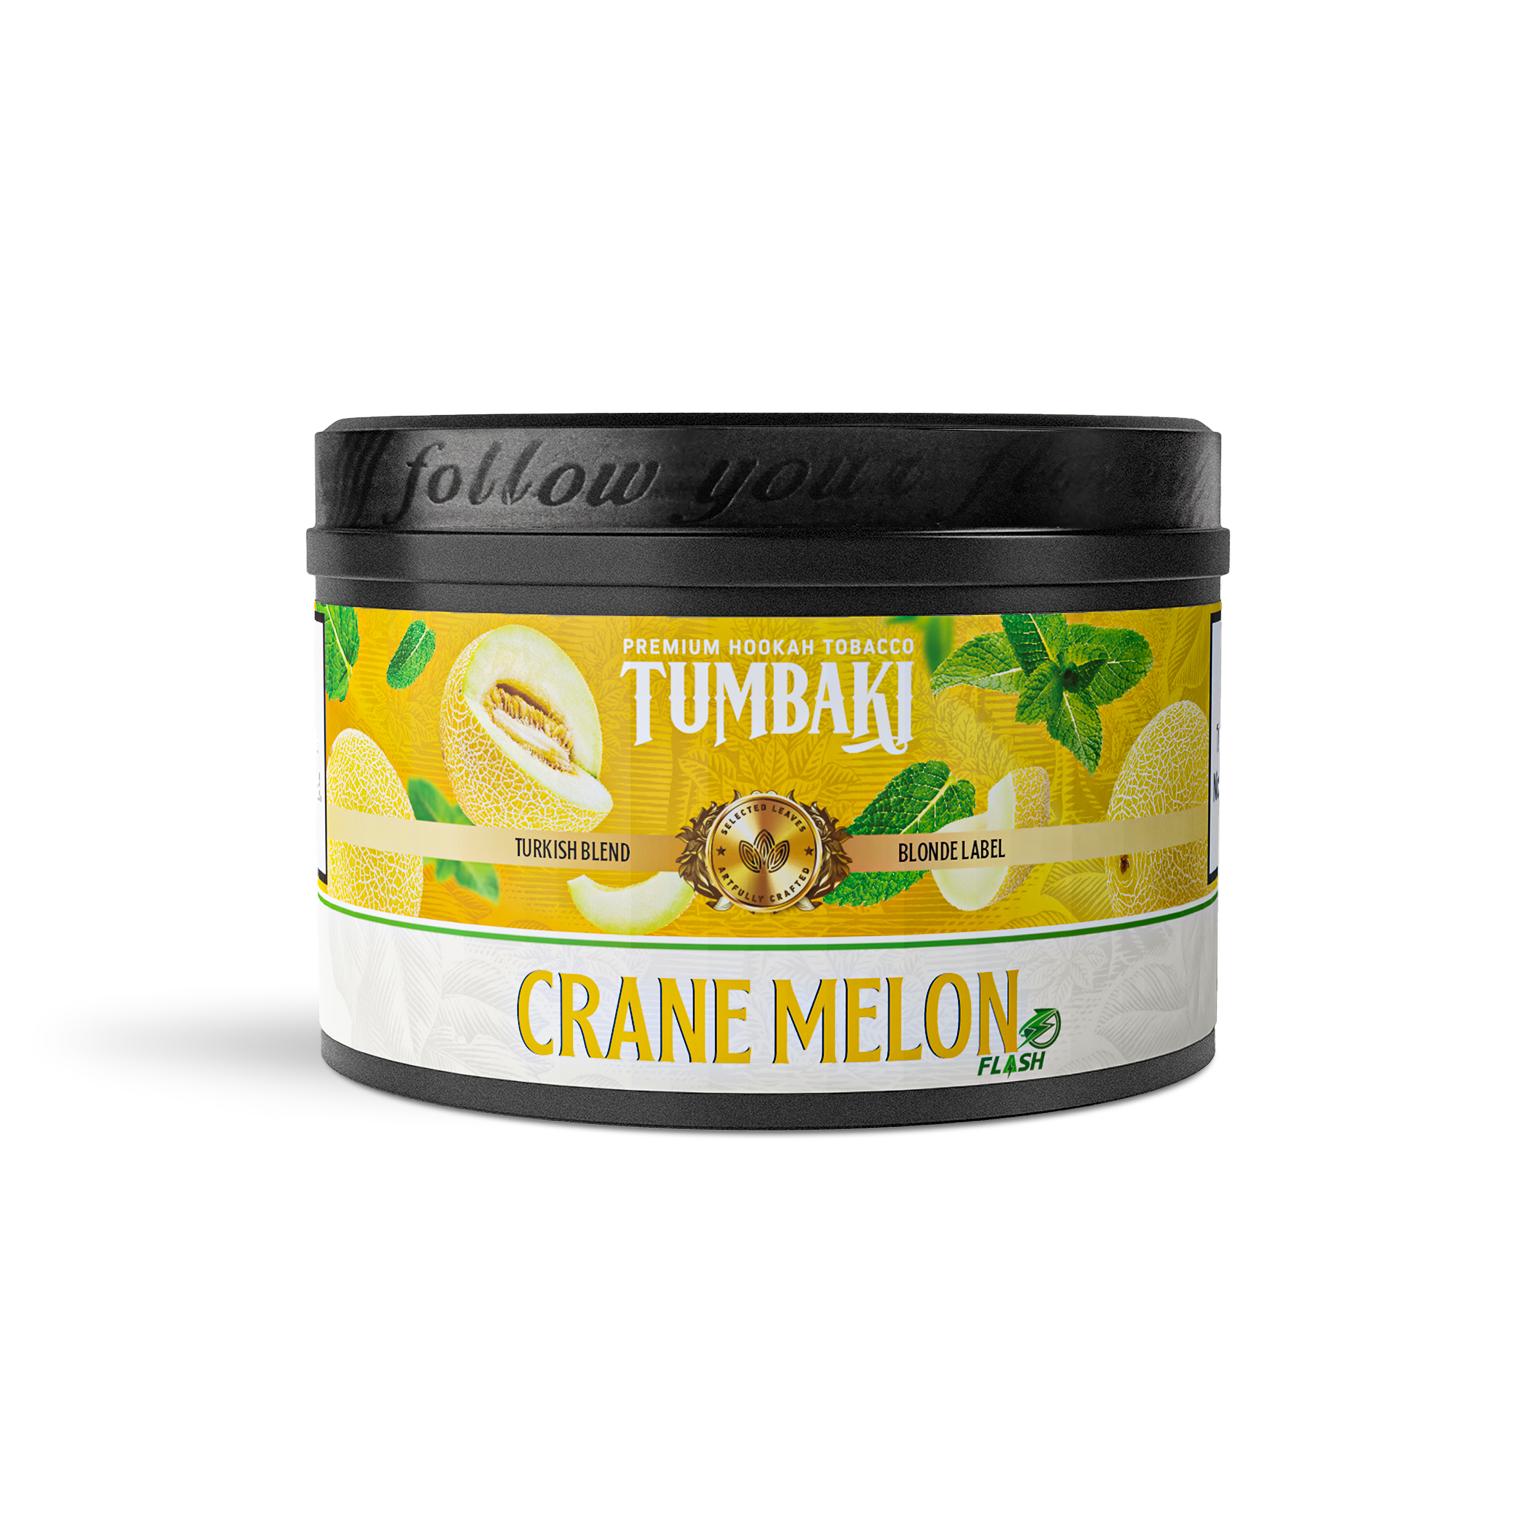 Crane Melon